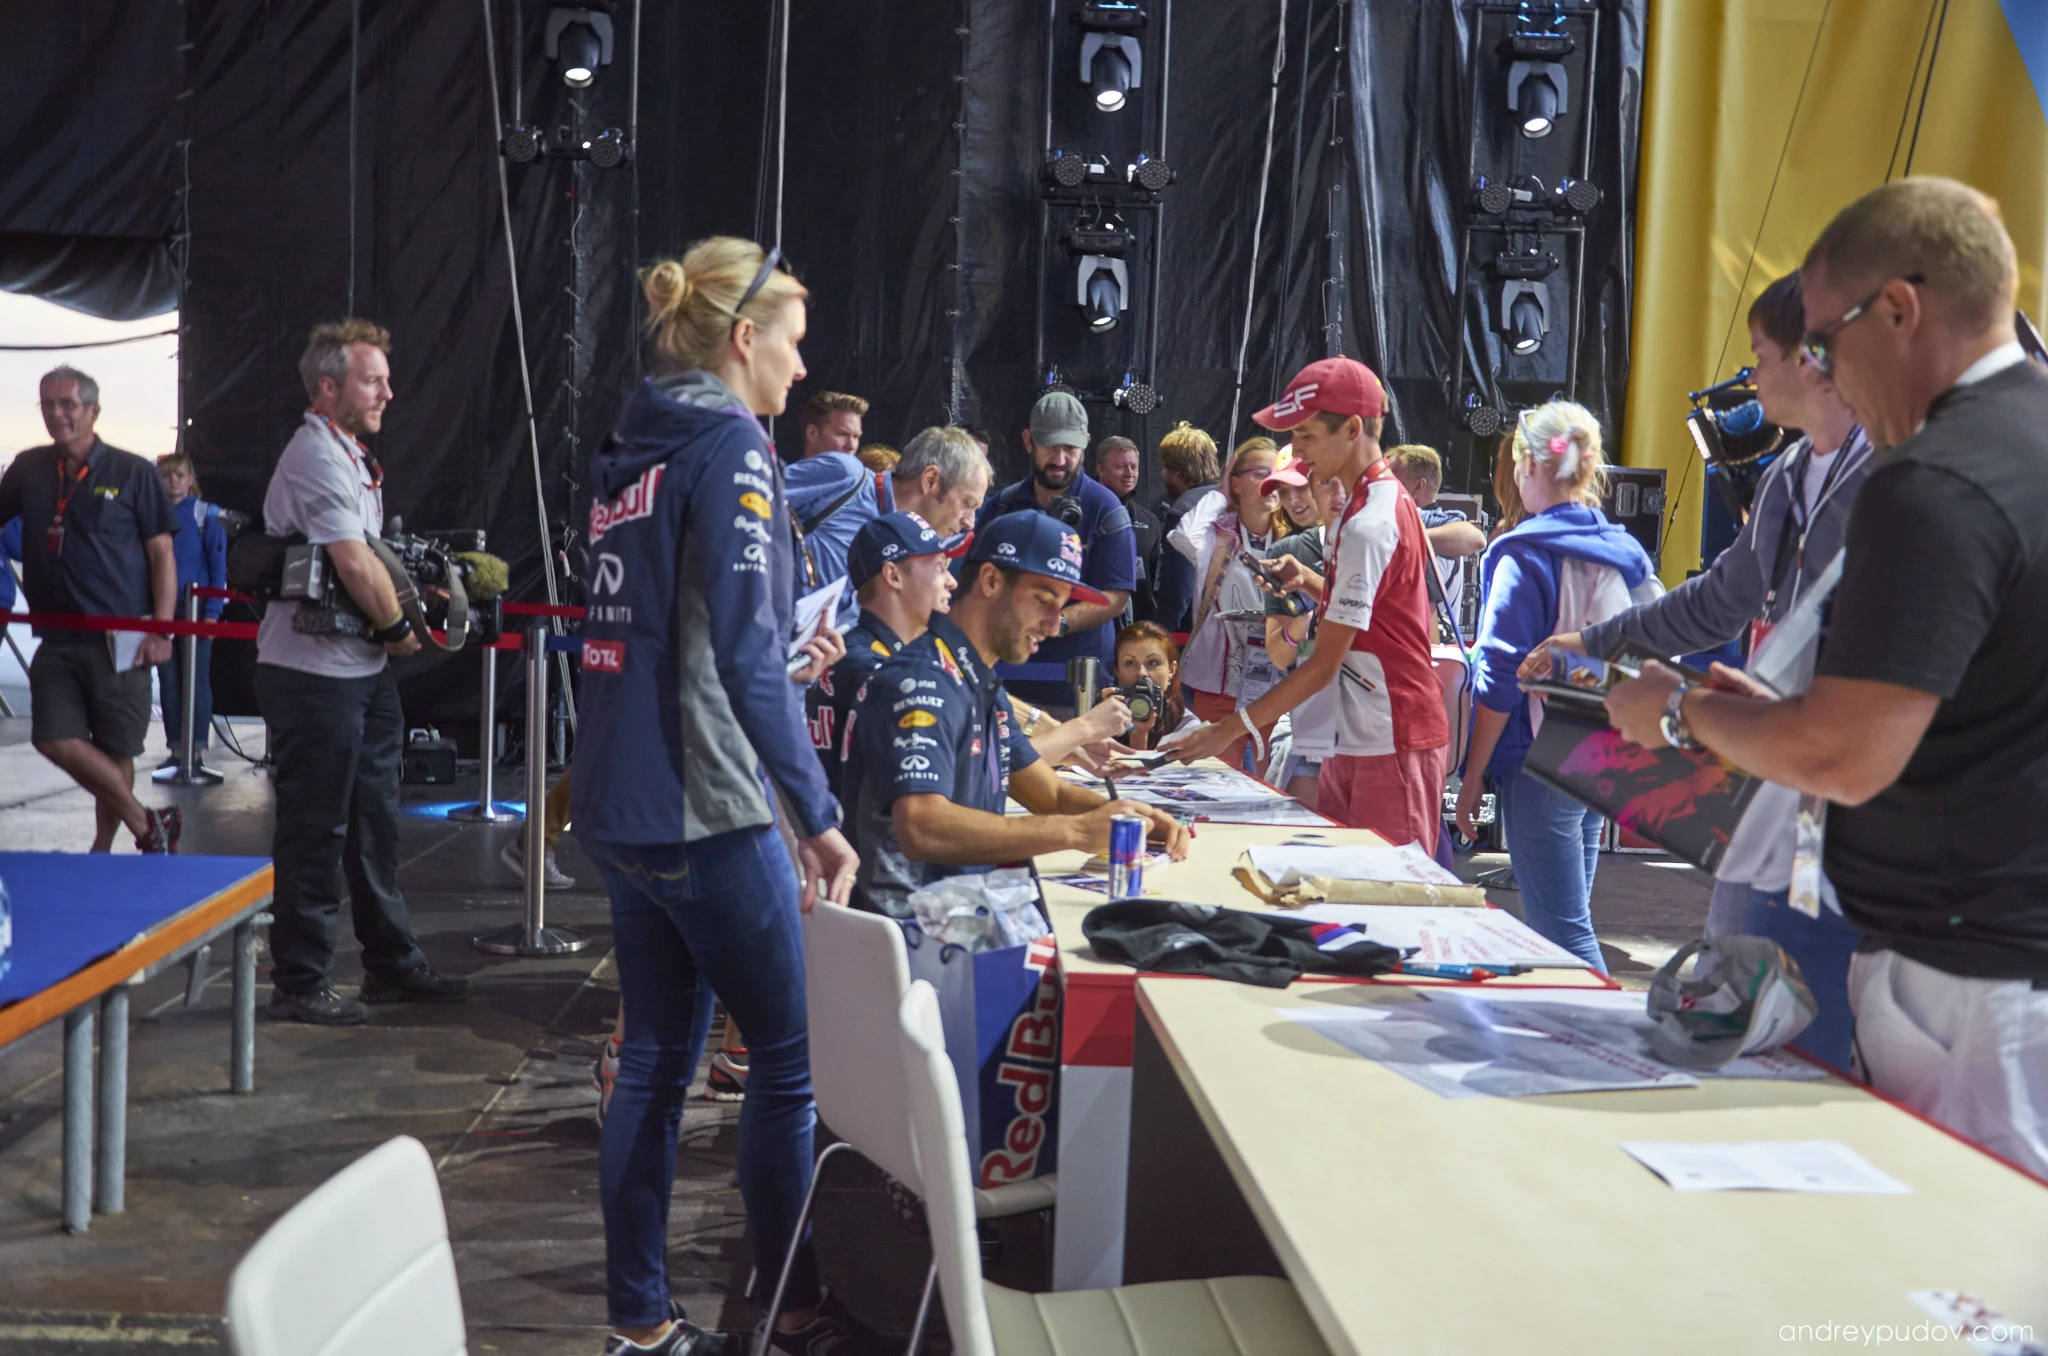 2015 Formula 1 Russian Grand Prix - Red Bull pilots Daniil Kvyat and Daniel Ricciardo on the autograph session.